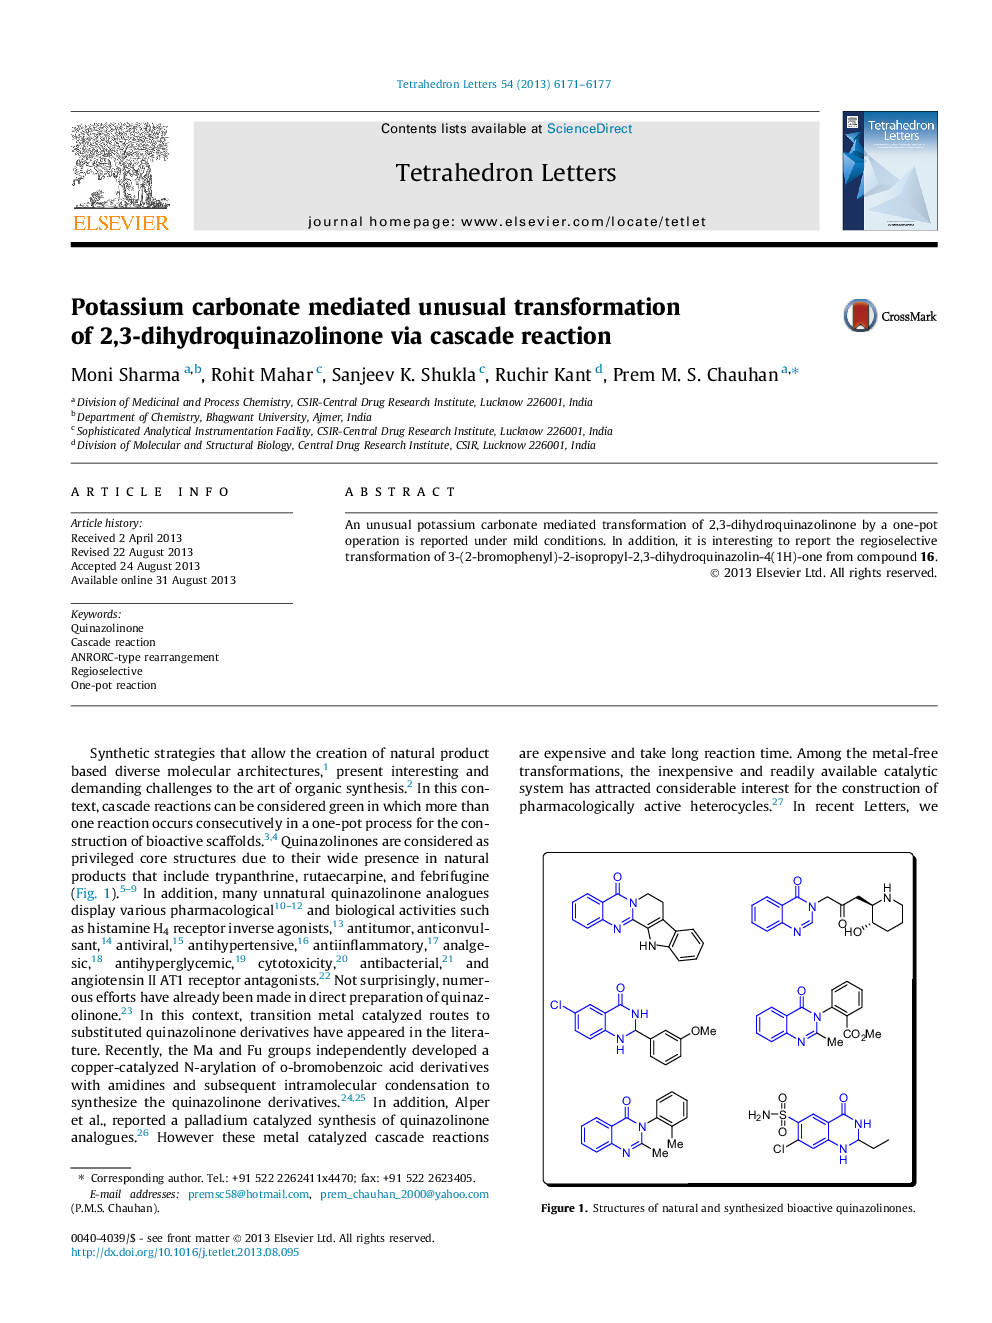 Potassium carbonate mediated unusual transformation of 2,3-dihydroquinazolinone via cascade reaction